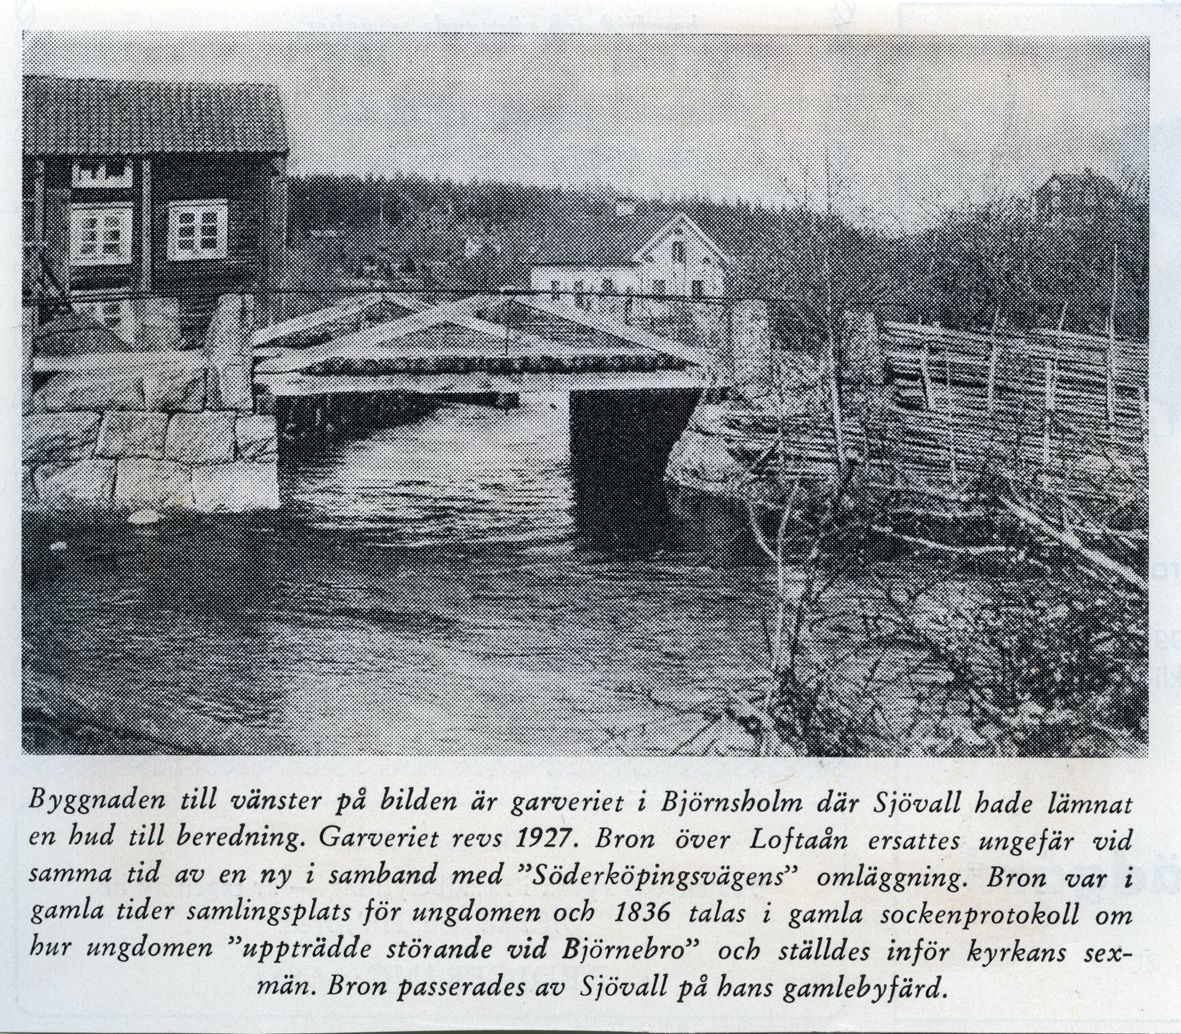 Garveriet i Björnholm / Harg. Ur Vimmerby tidnings julnummer 1958.